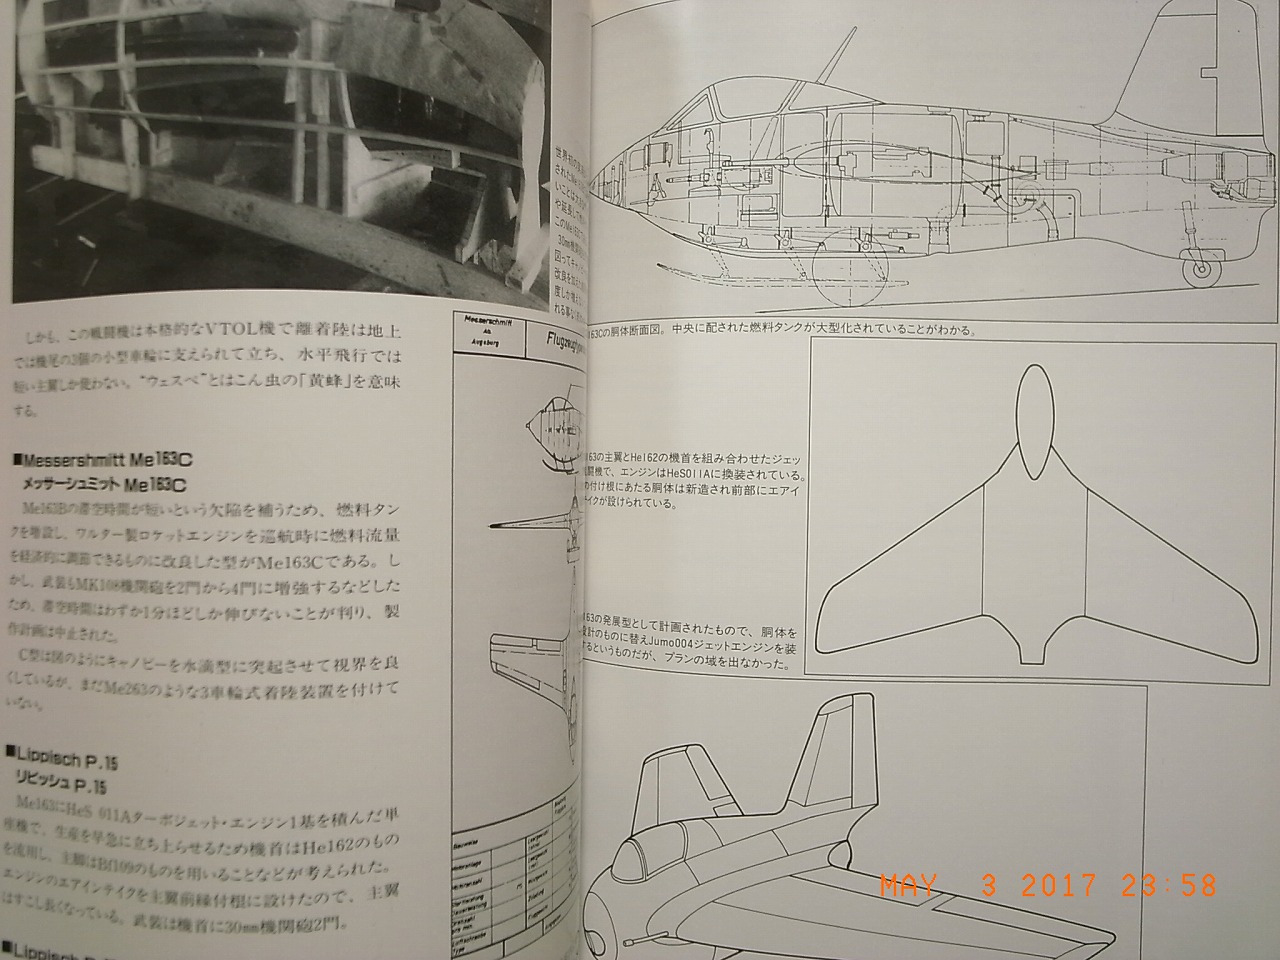 Luftwaffe Project Warplanes In W W Ii Pictorial Book Military Aircraft 23 Delta Publishing Rarebooksjapan Com